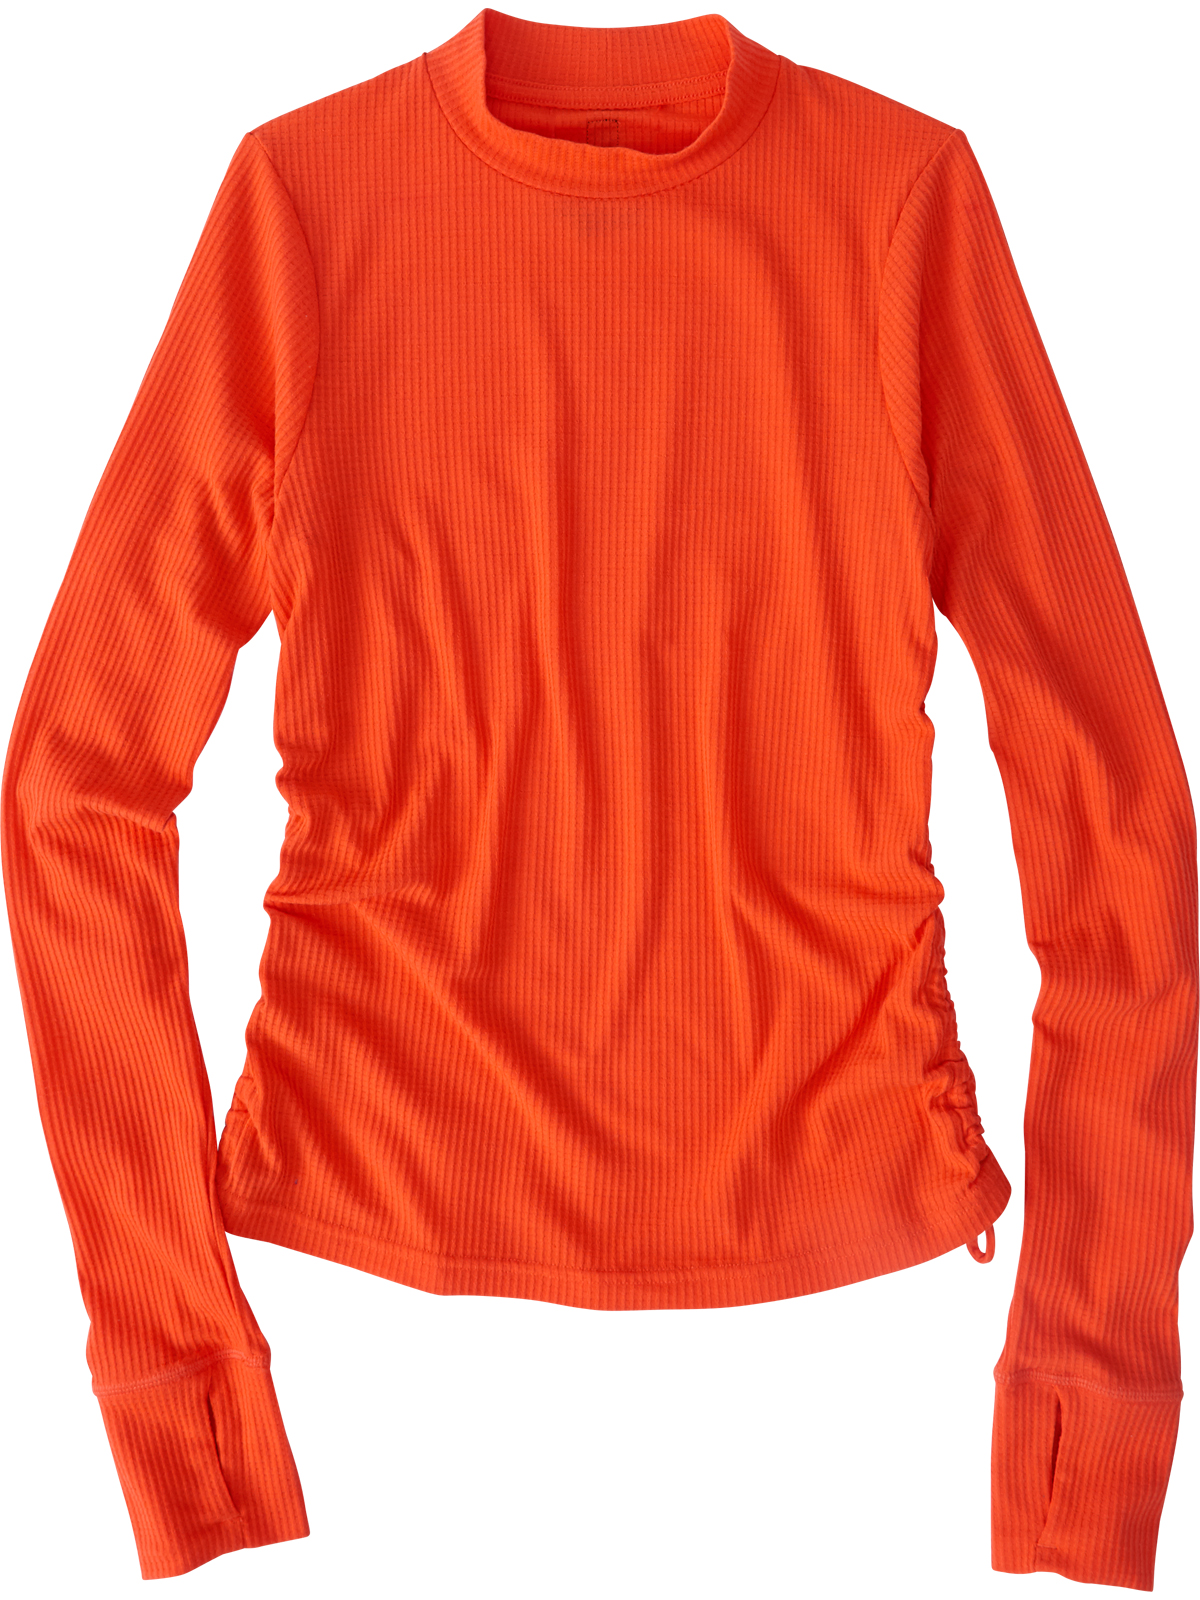 Tangerine Brand Active Womens 1/4 Zip Long Sleeve Athletic Top Women's Size  S